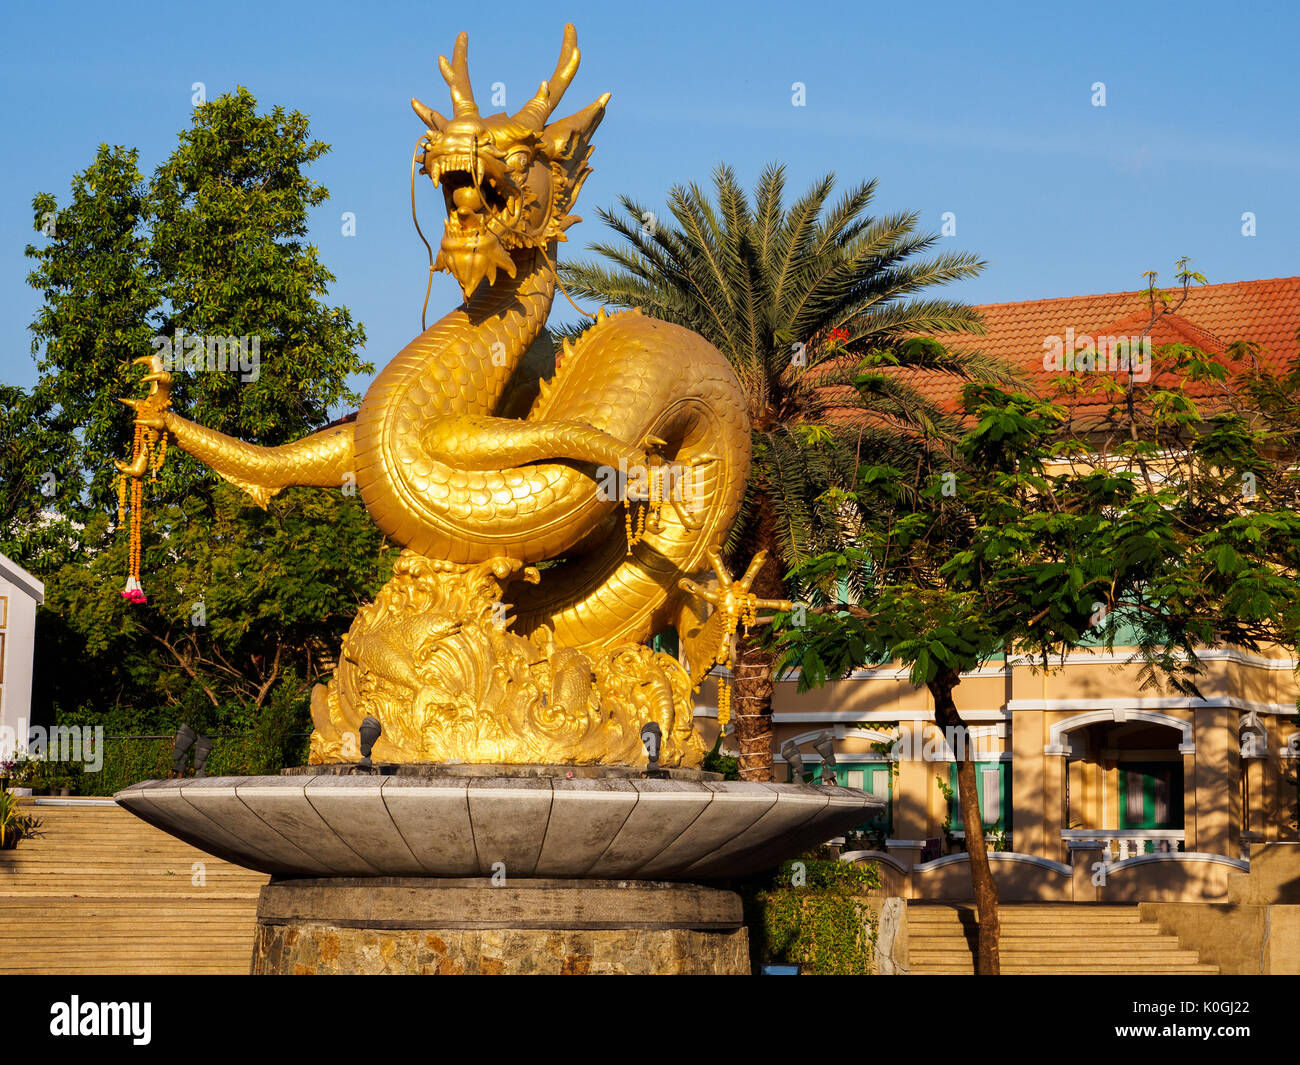 Golden dragon statue in Phuket Town, Thailand Stock Photo